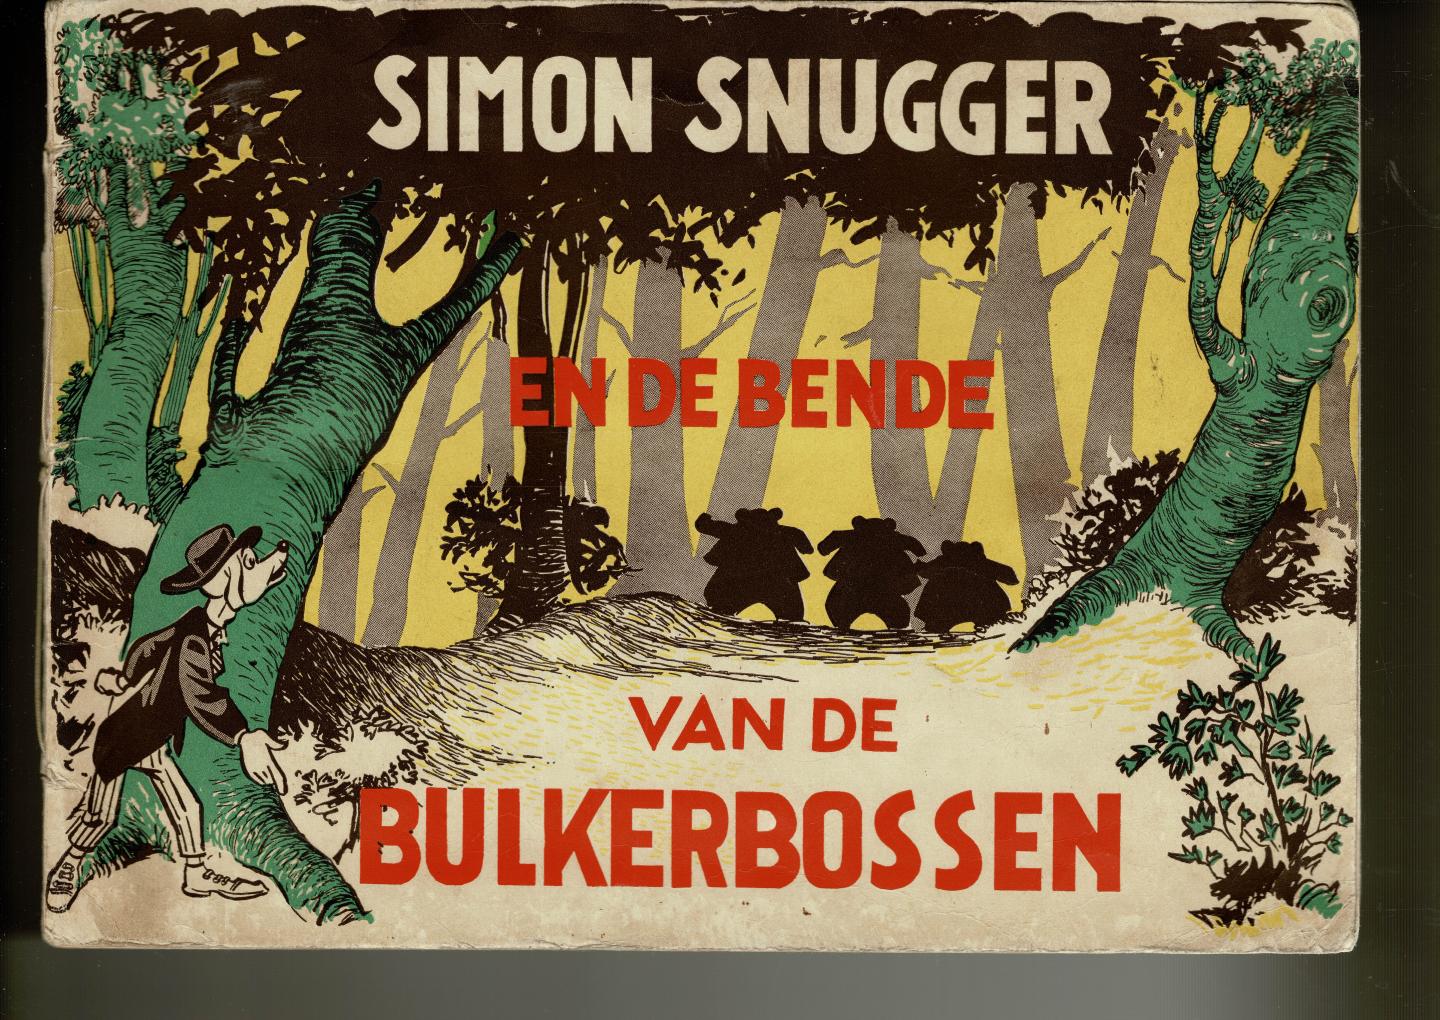  - Simon Snugger en de Bulkerbossen